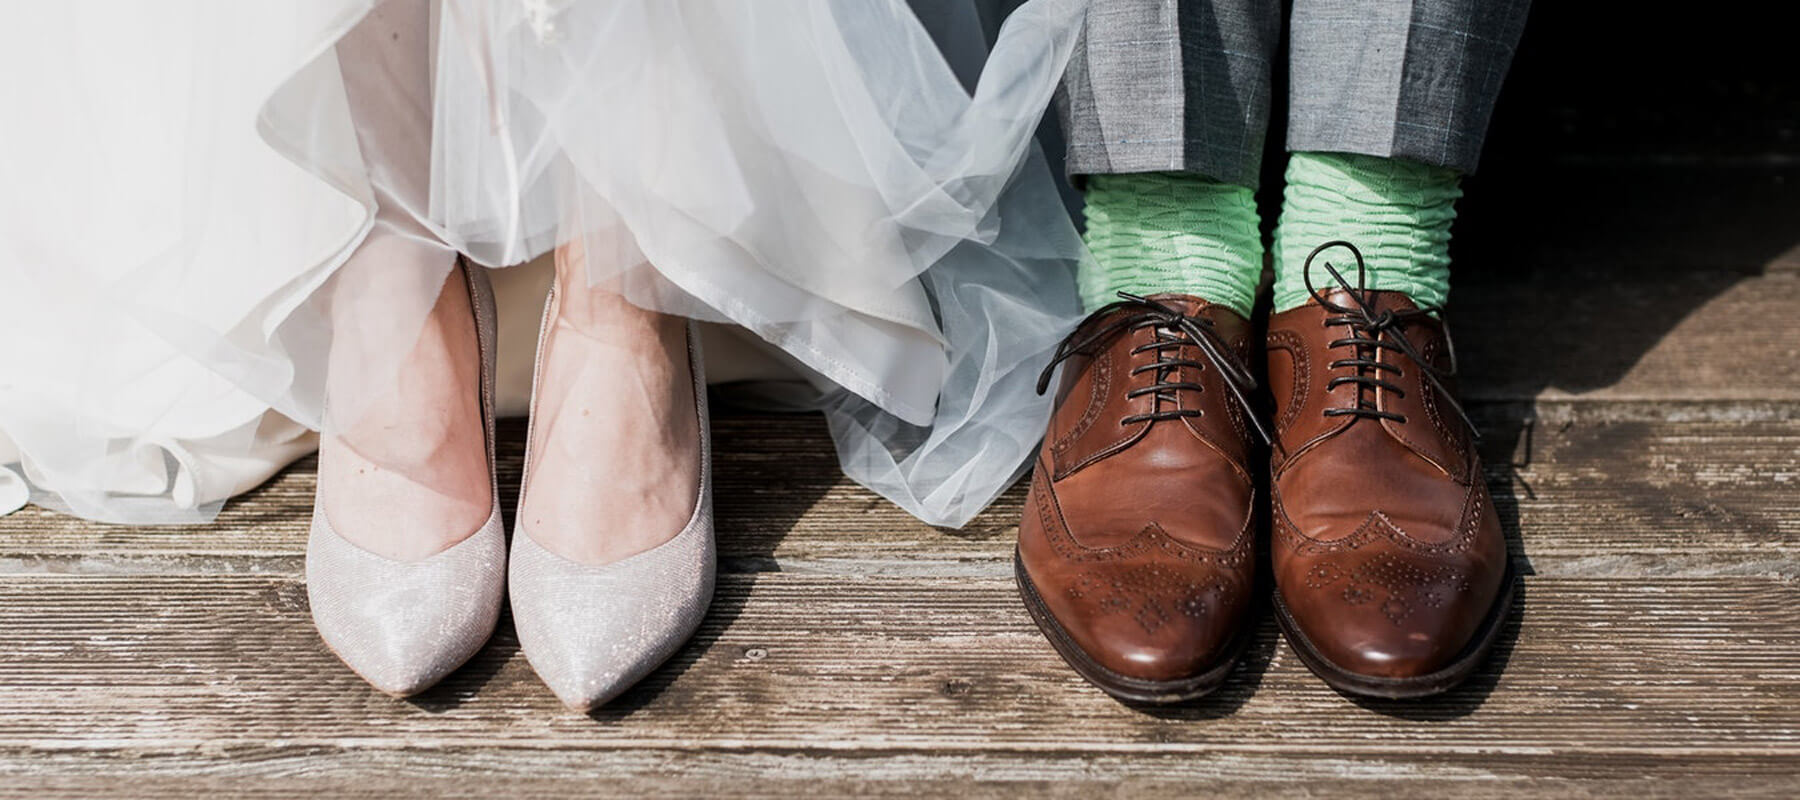 bride-and-groom-feet